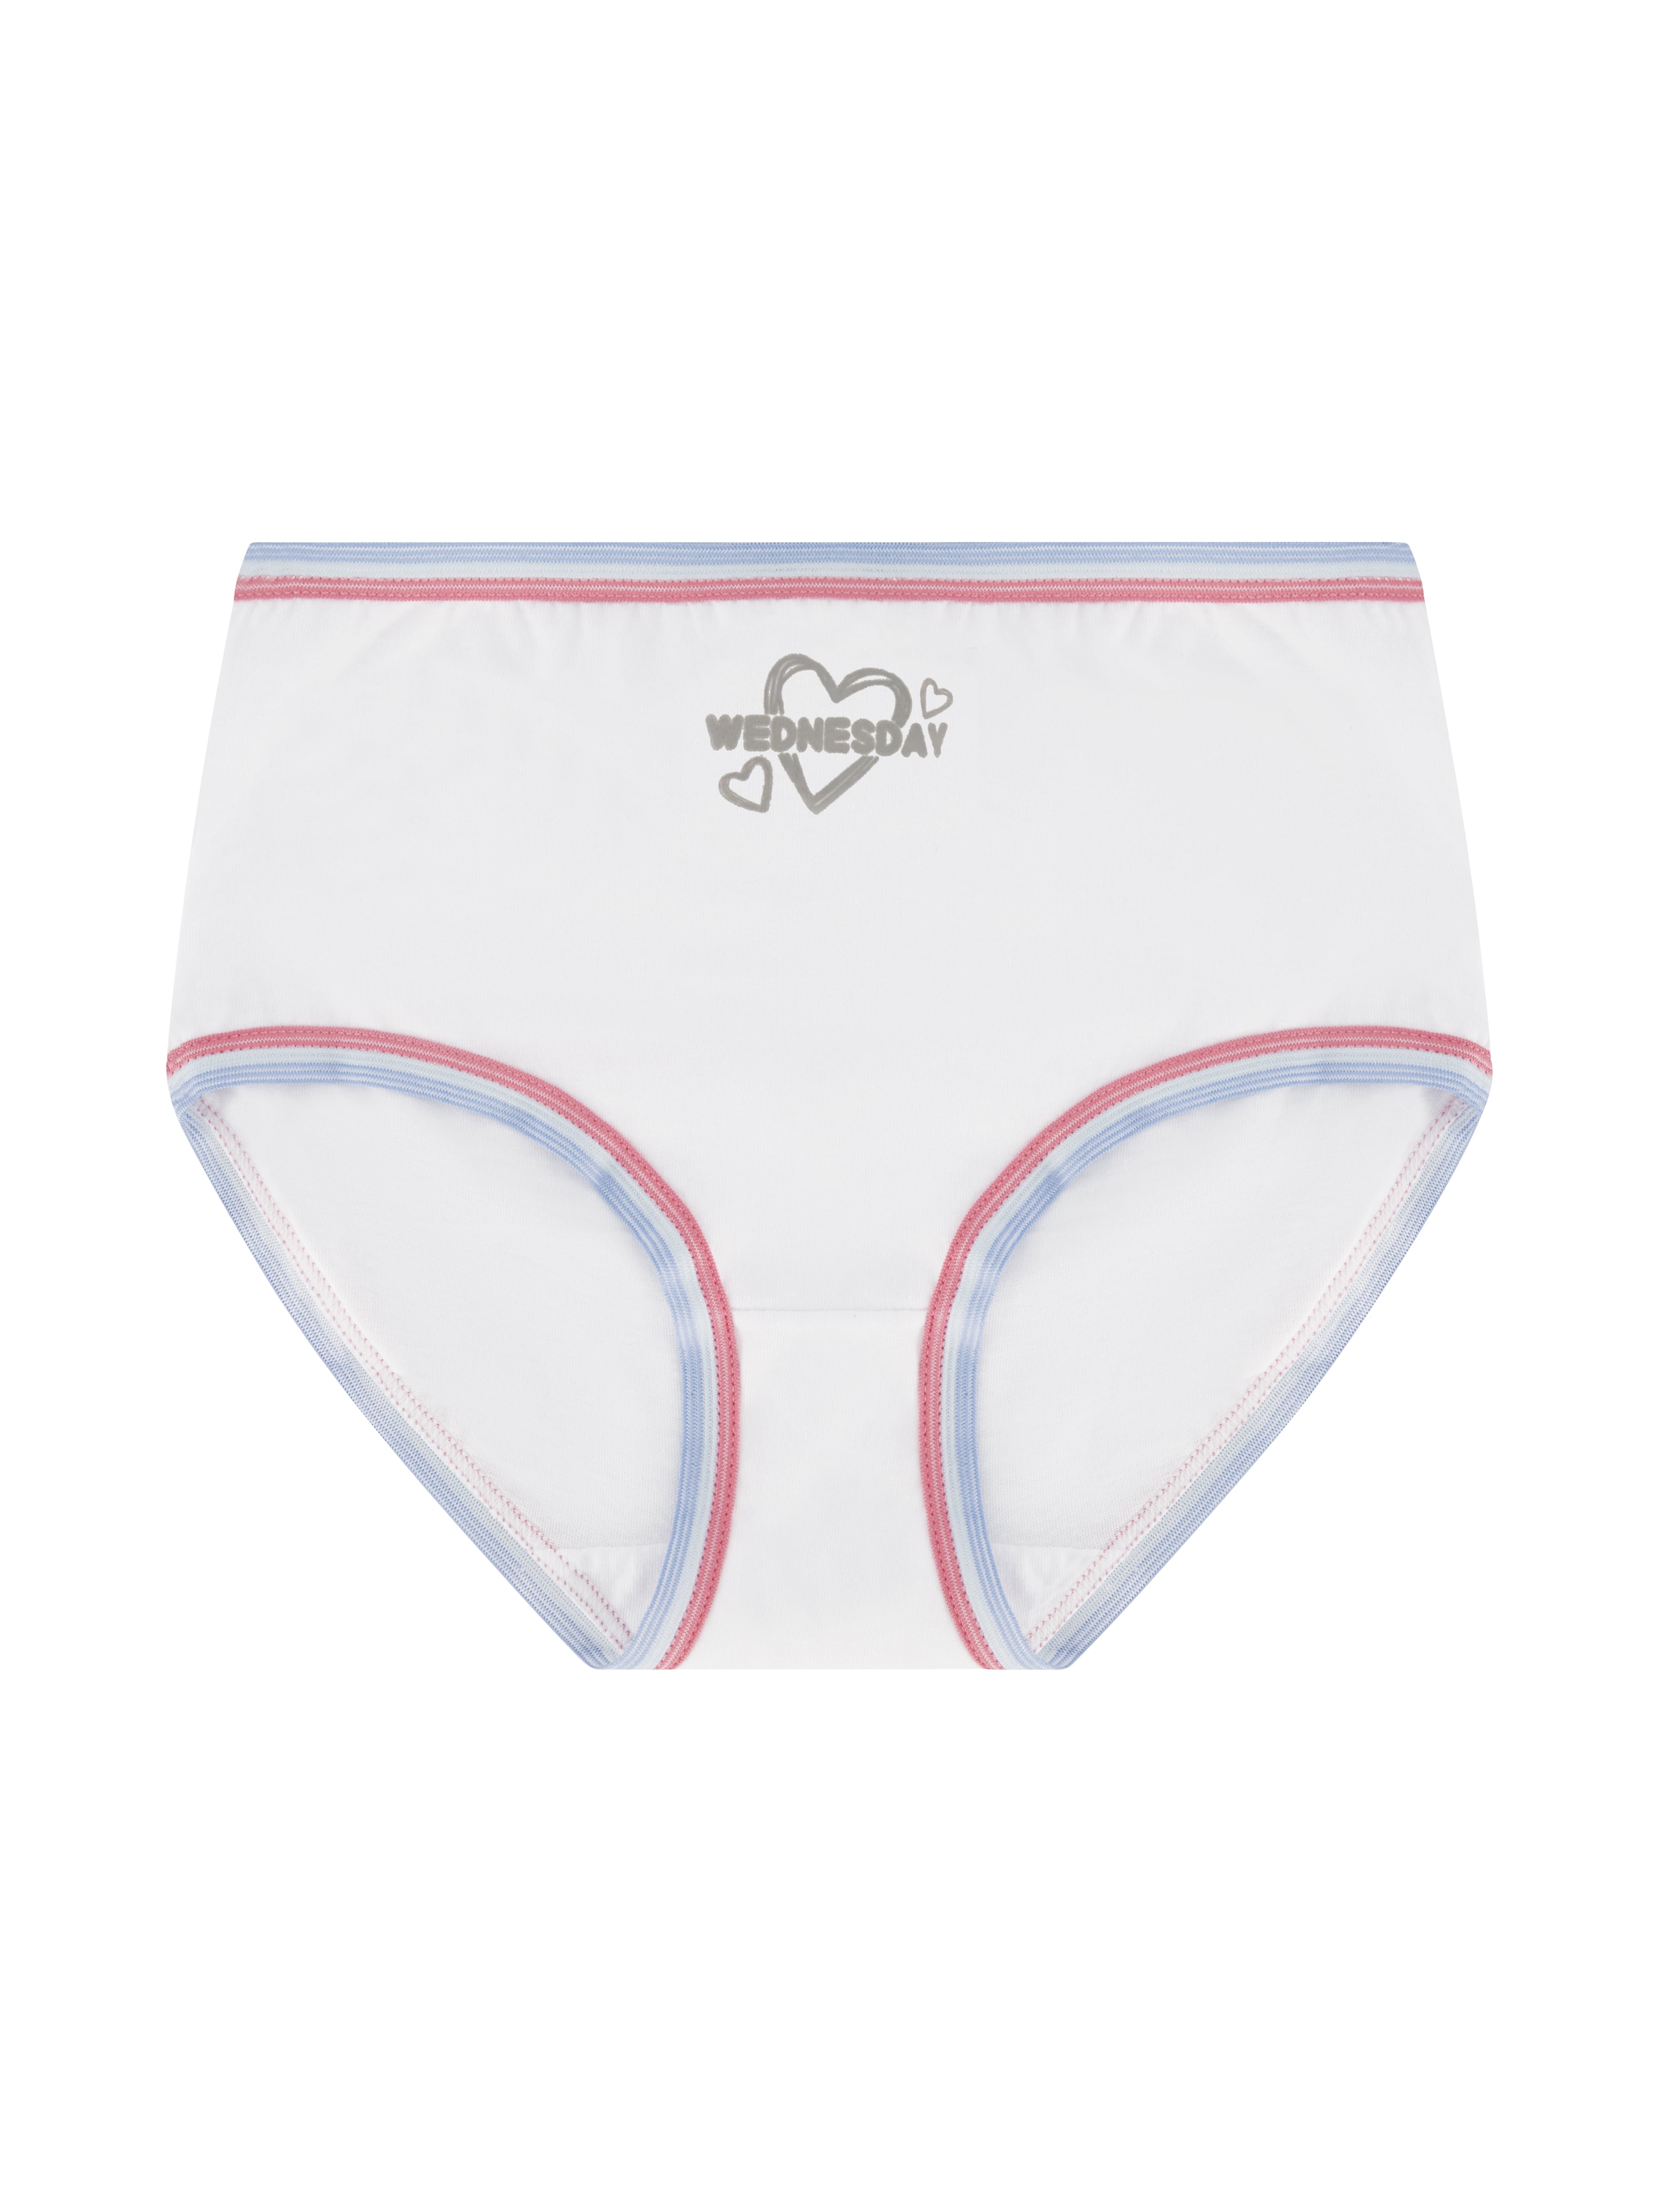 Wonder Nation Girls Underwear, 10 Pack Panties Size 16 #1593-U7211